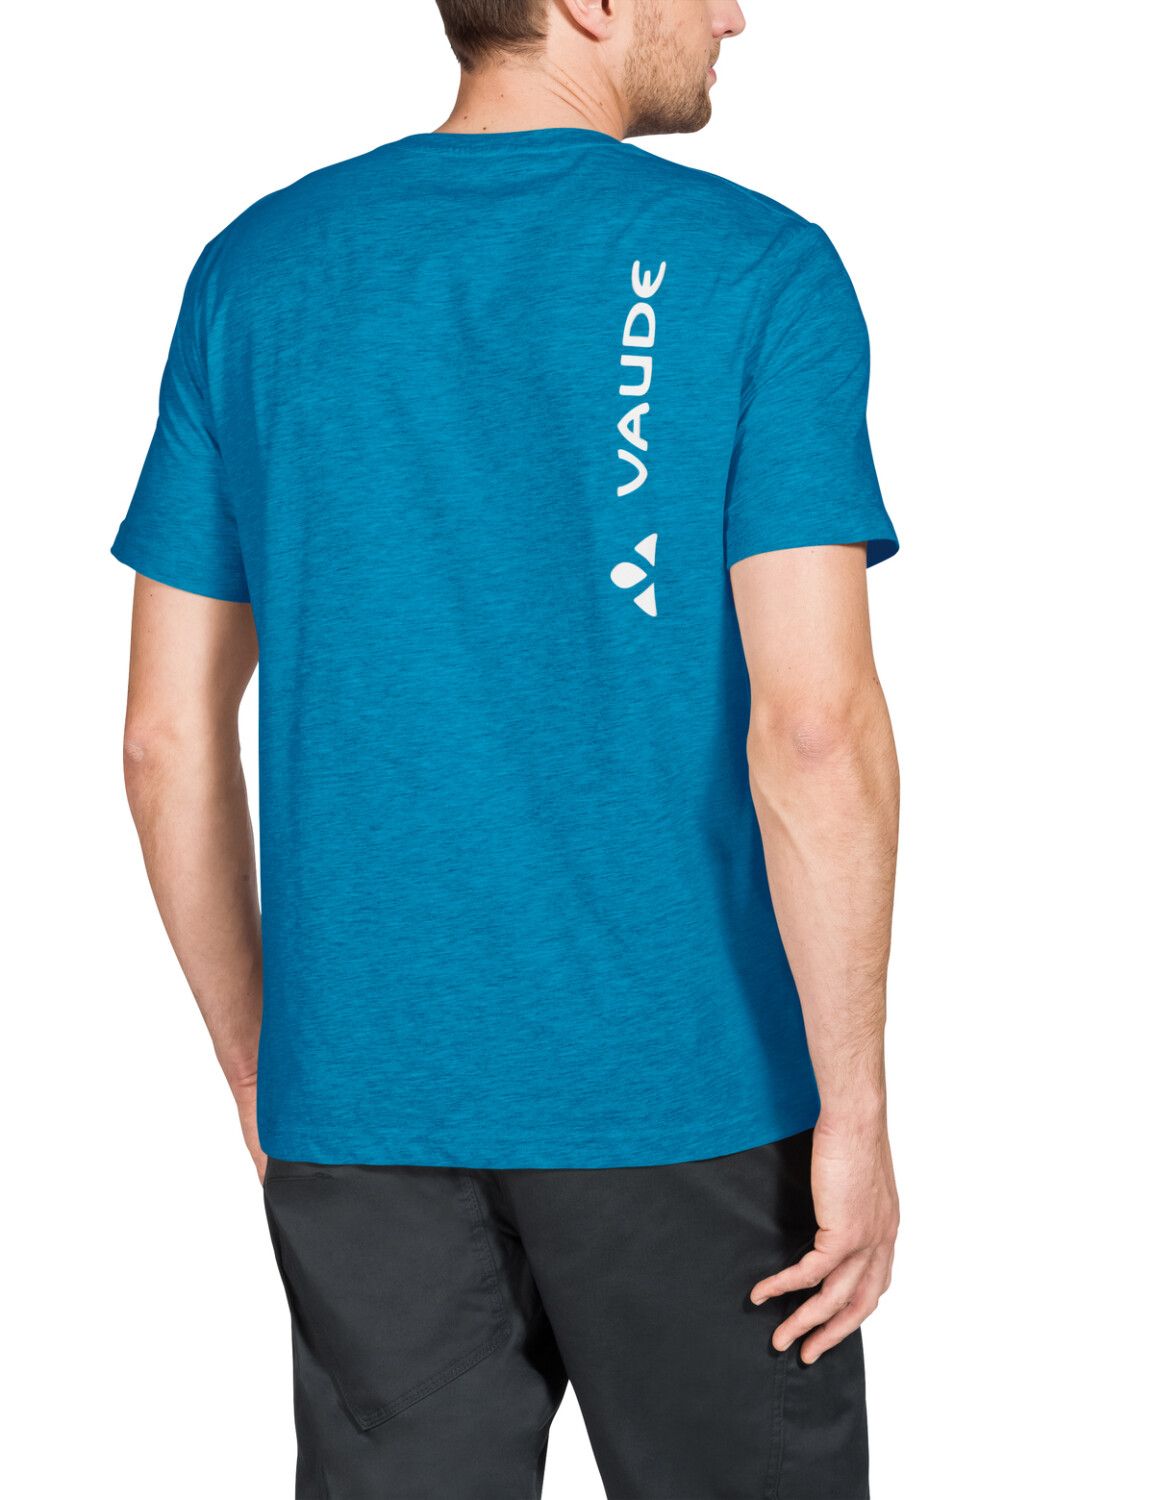 VAUDE Men's Brand T-Shirt (Bild 16)